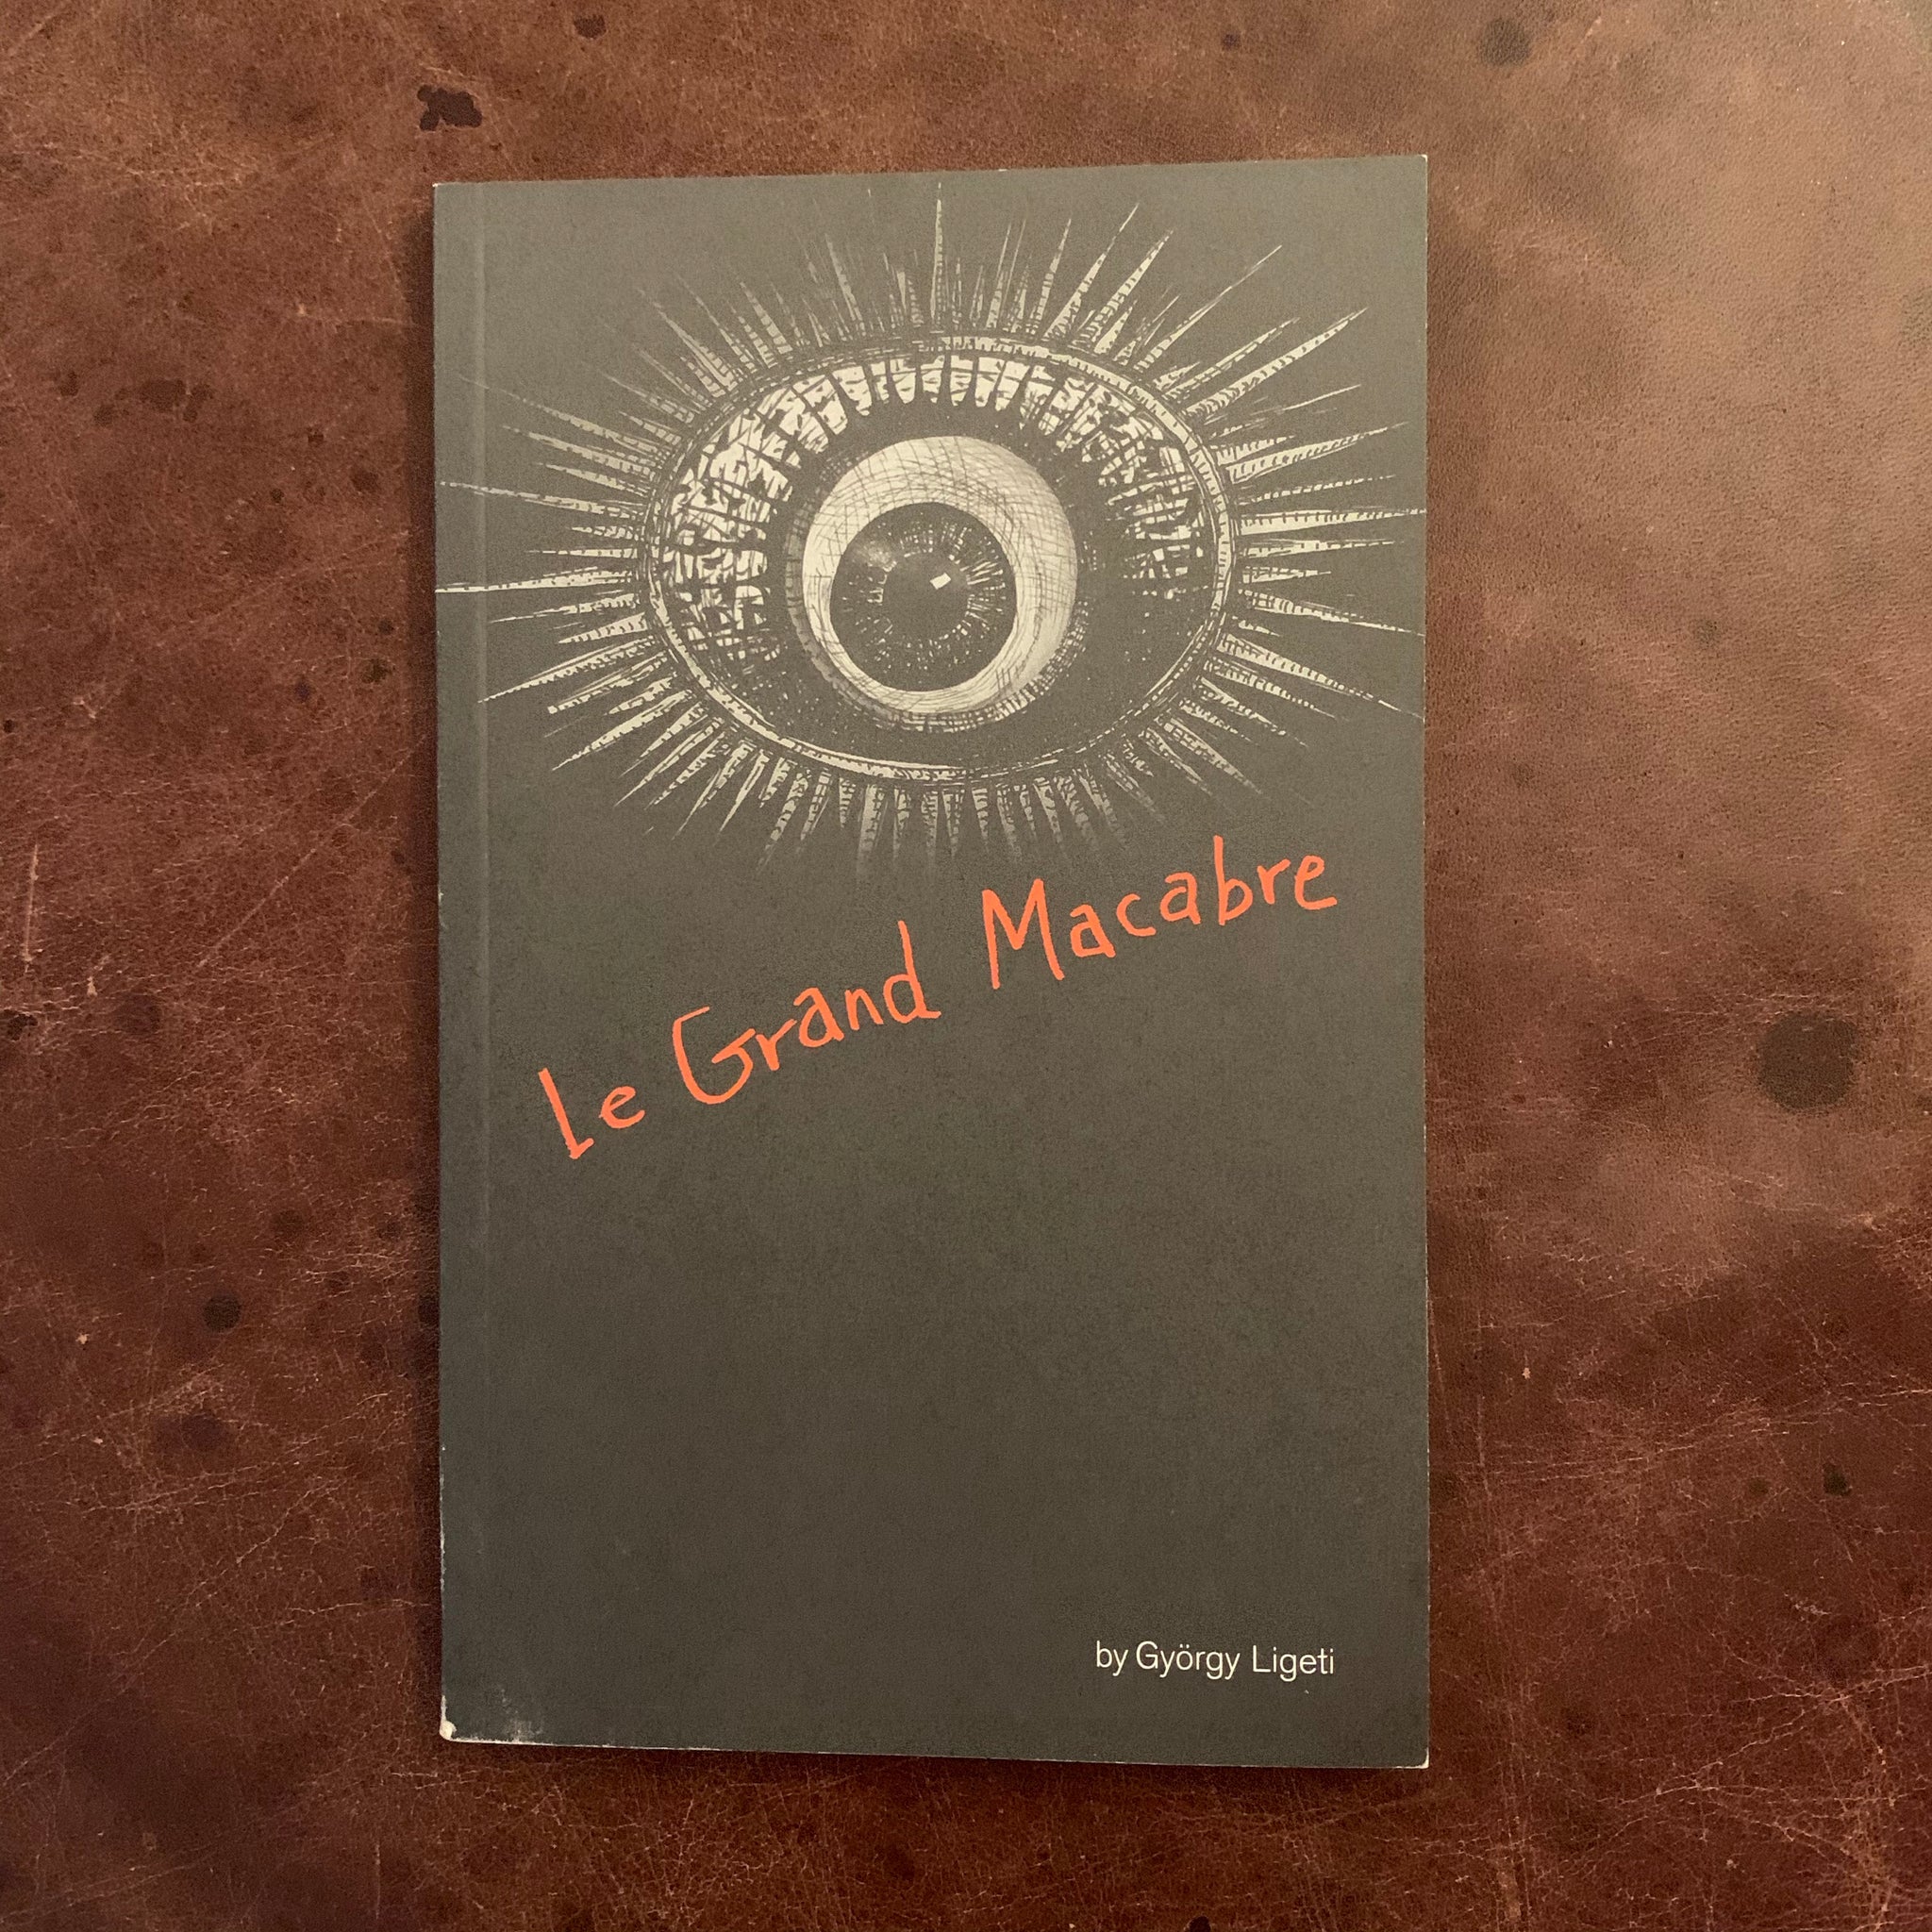 La Grand Macabre by György Ligeti